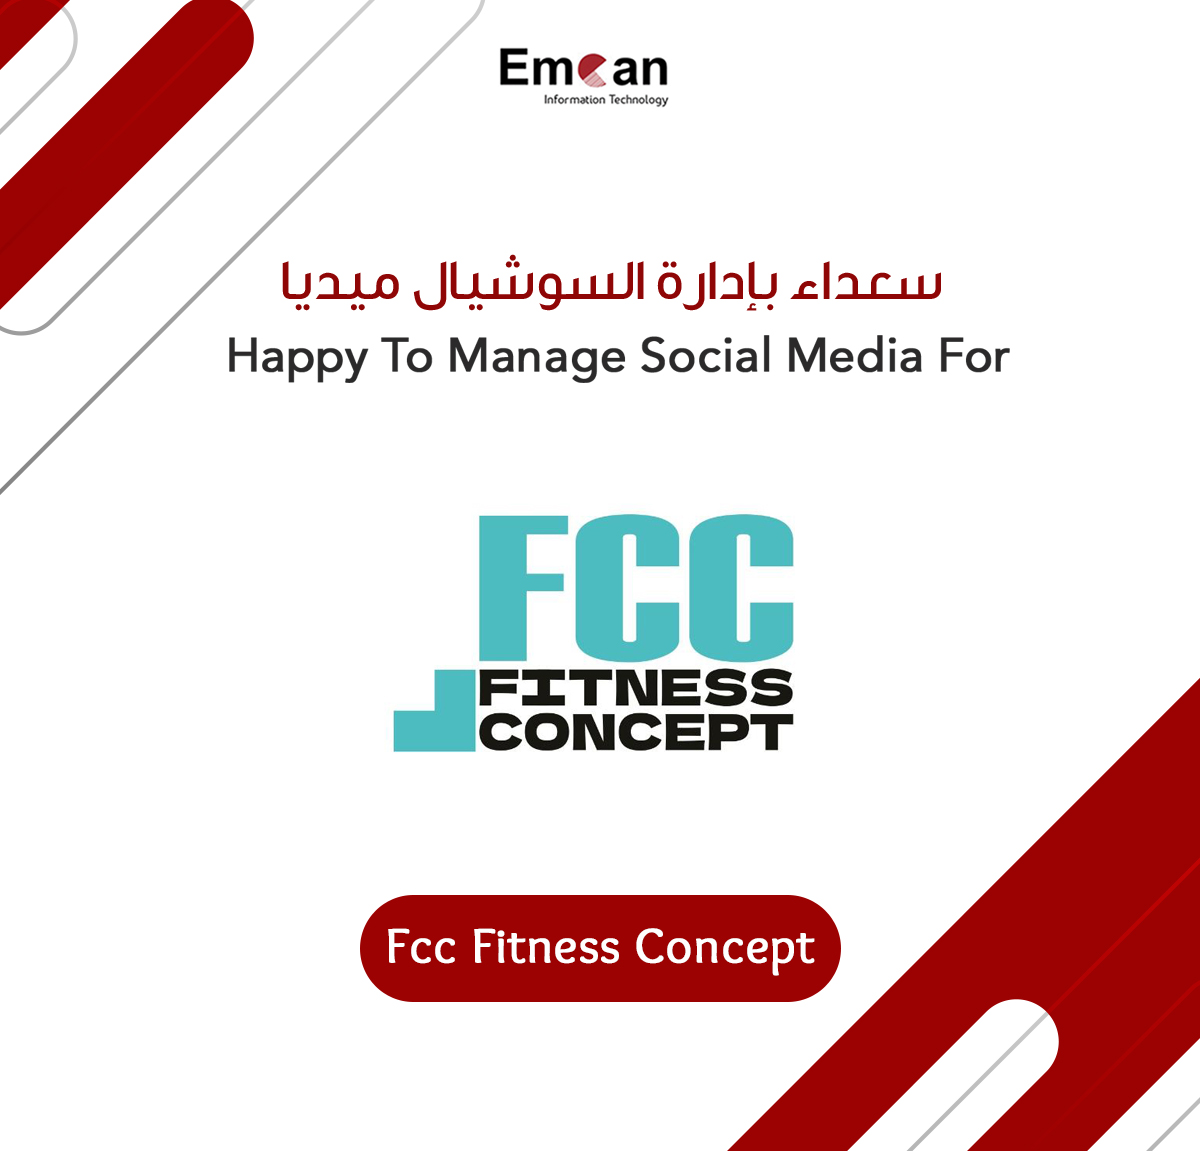 Fcc Fitness Concept